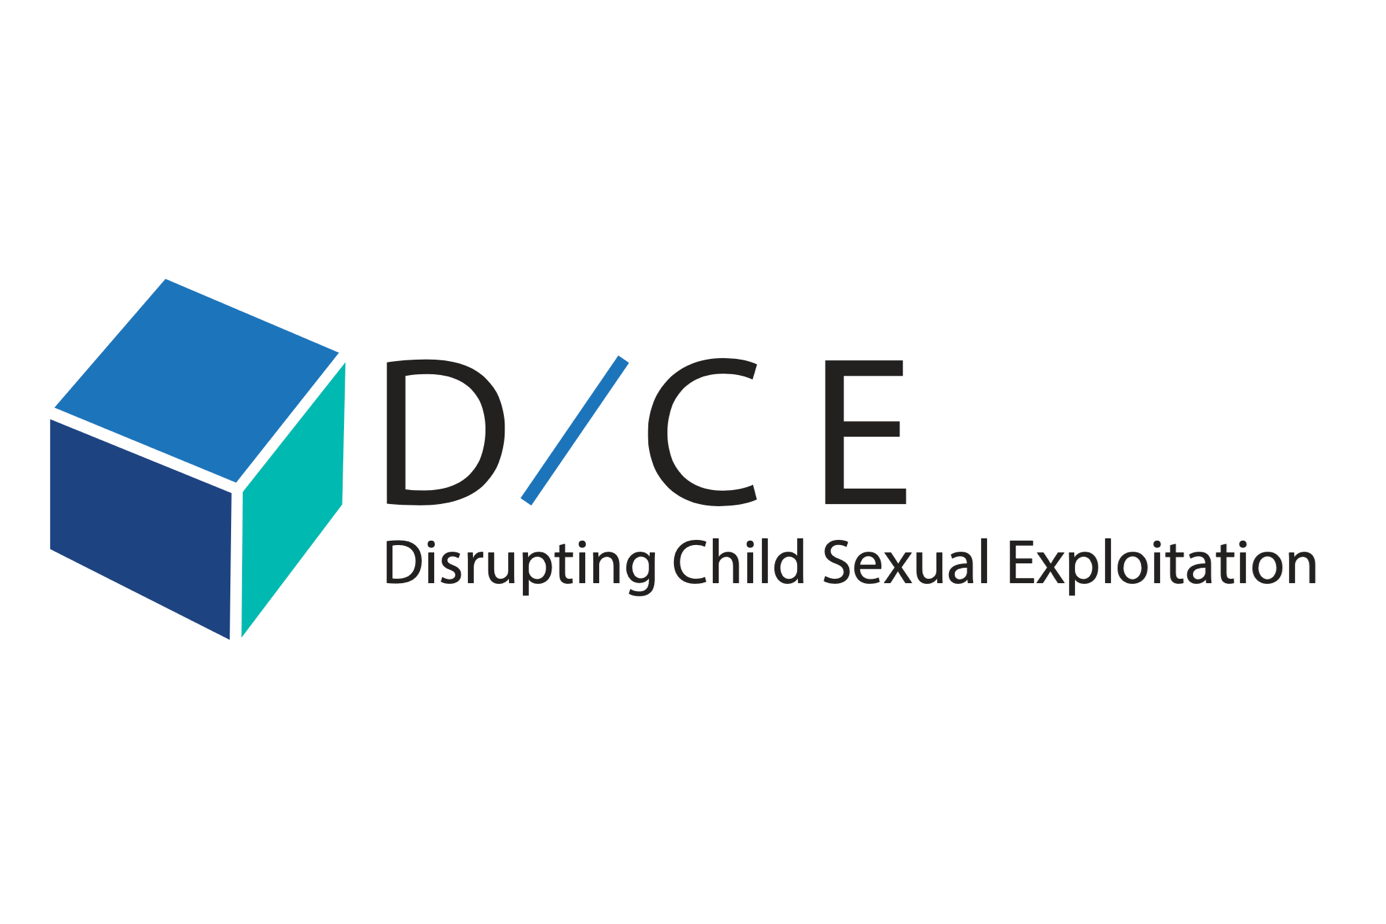 DICE: Disrupting child sexual exploitation